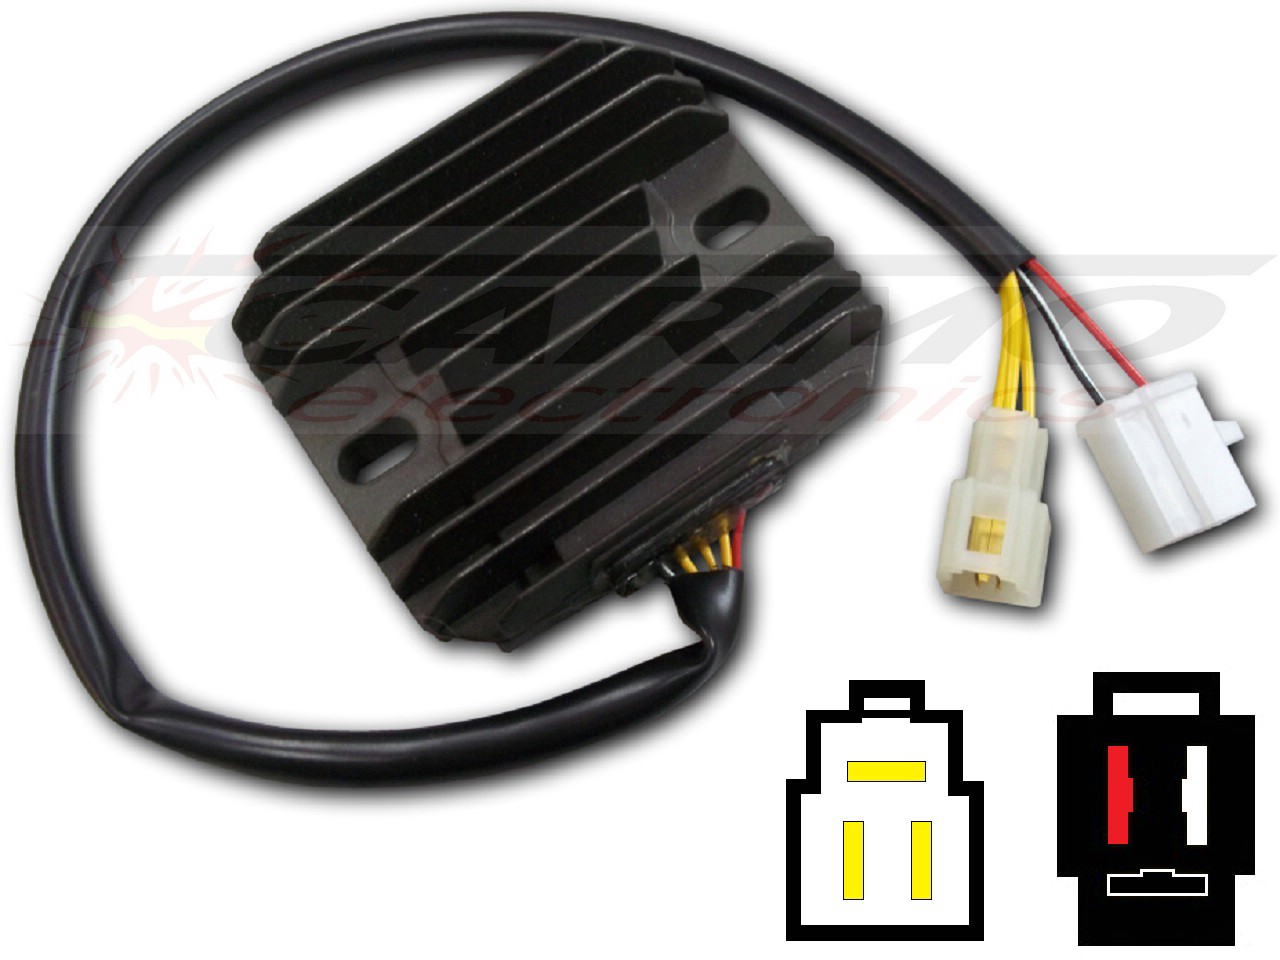 CARR561 Suzuki VZ800 MOSFET Spanningsregelaar gelijkrichter - Clique na Imagem para Fechar